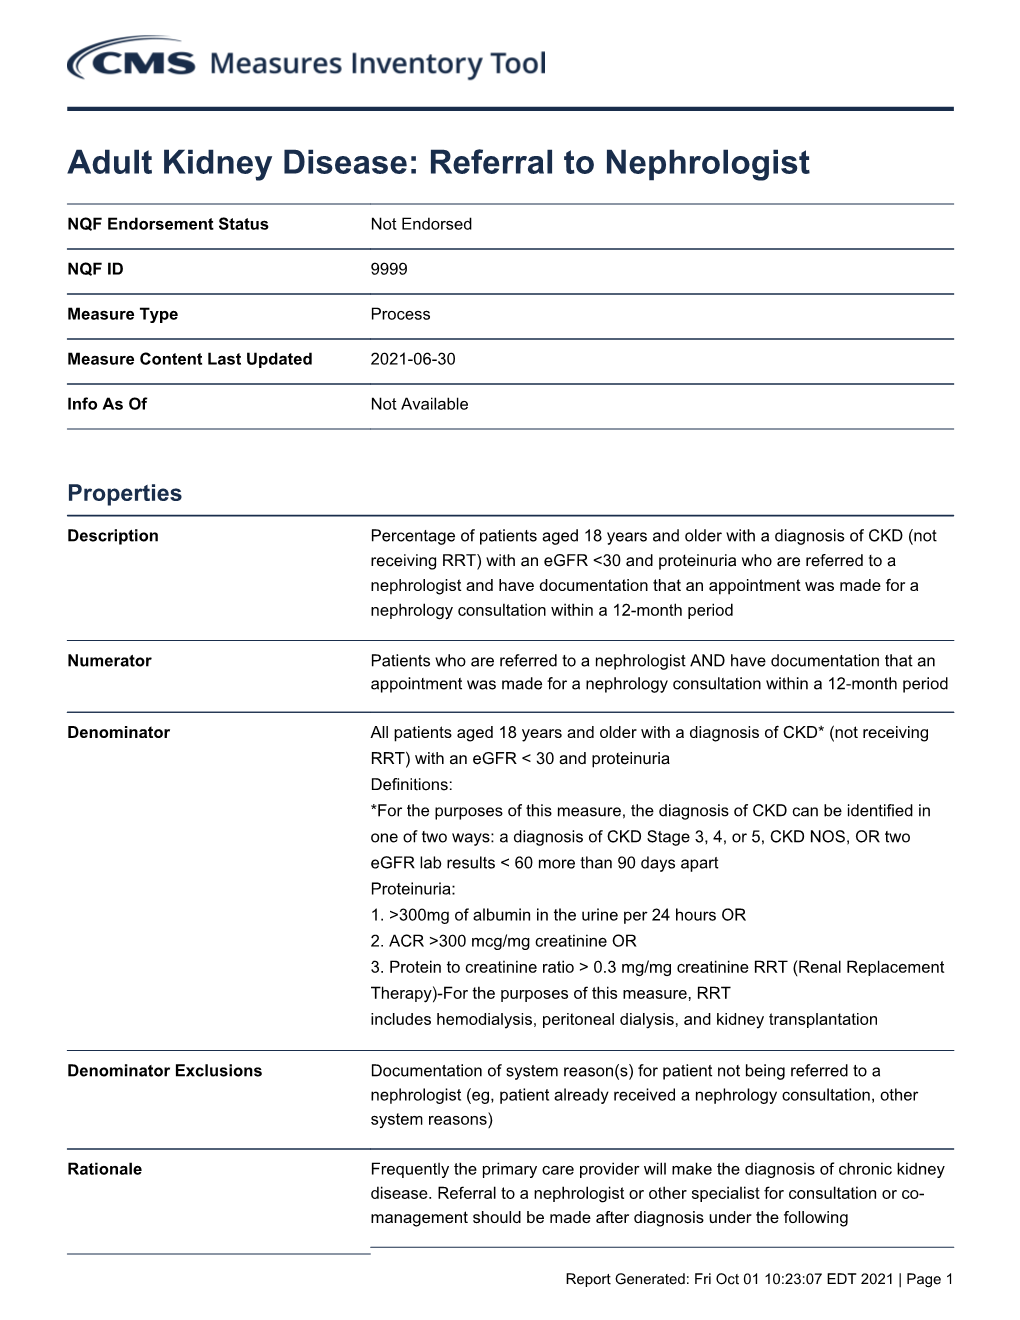 Adult Kidney Disease: Referral to Nephrologist